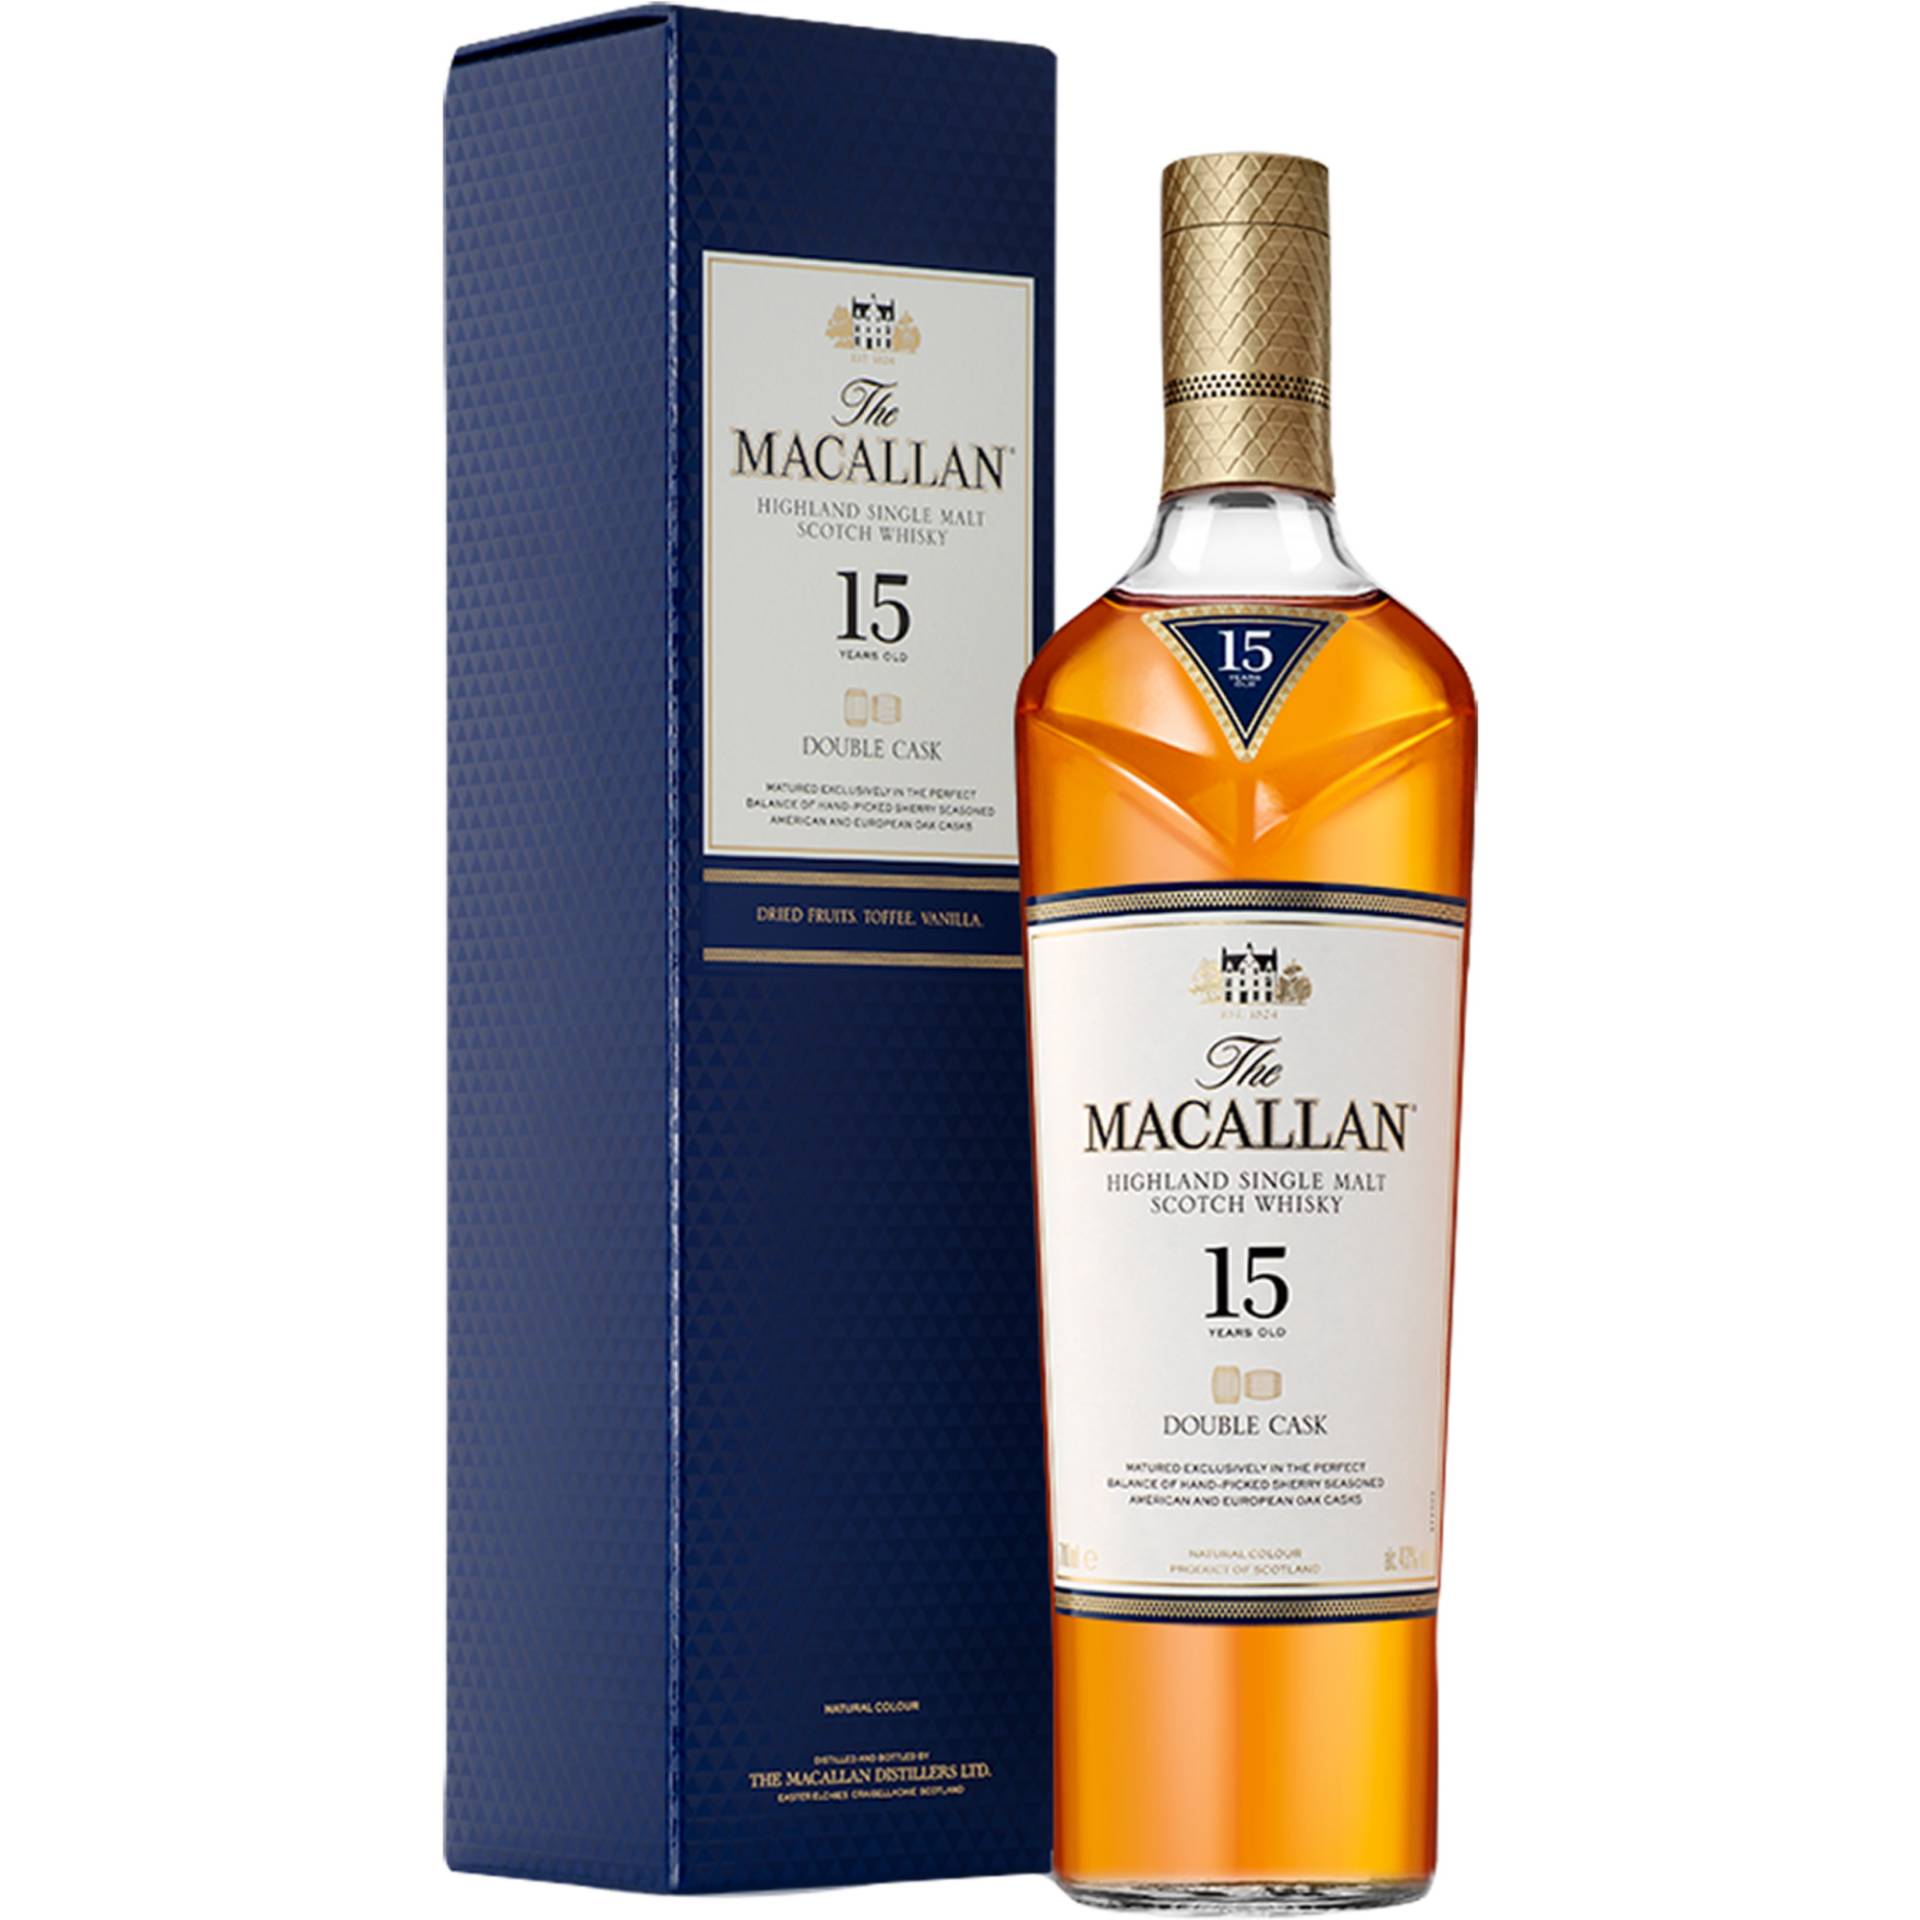 Macallan 15 Years Double Cask Highland Single Malt, Whisky, 0,7 L, 43% Vol., Schottland, Spirituosen von The Edrington Group, 2500 Great Western Roas, Glasgow, G15 6RW, Scotland